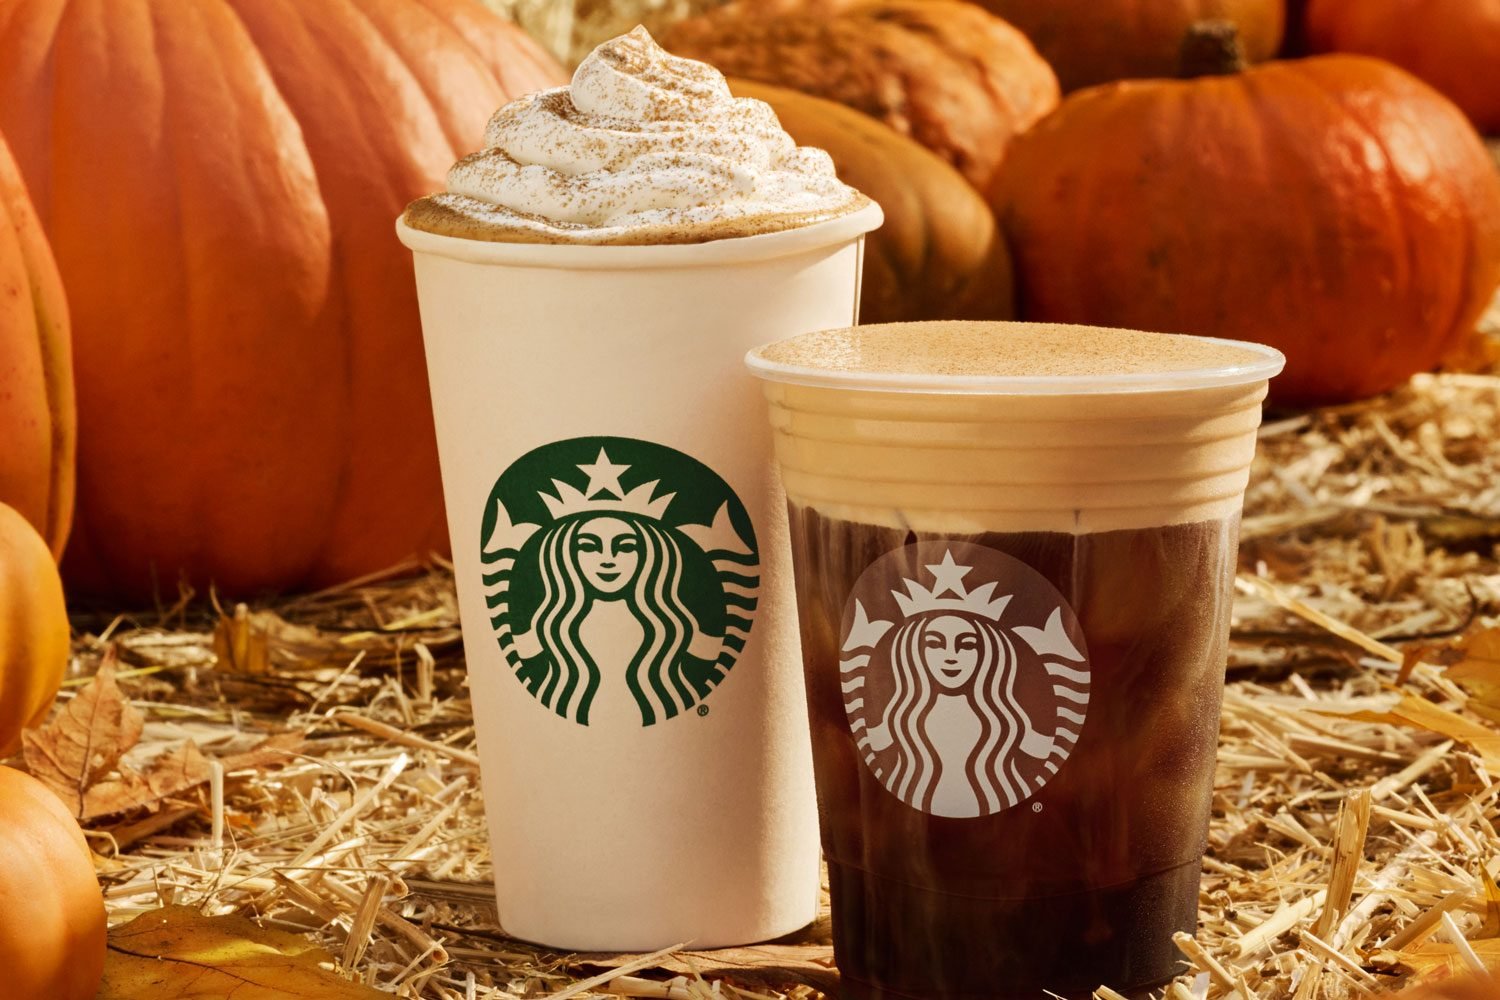 https://www.tasteofhome.com/wp-content/uploads/2022/08/Starbucks-Pumpkin-PSL-Pumpkin-Cream-Cold-Brew-Courtesy-Starbucks-Resize-Recolor-Crop-DH-TOH-PSL-Comeback.jpg?fit=700%2C1000